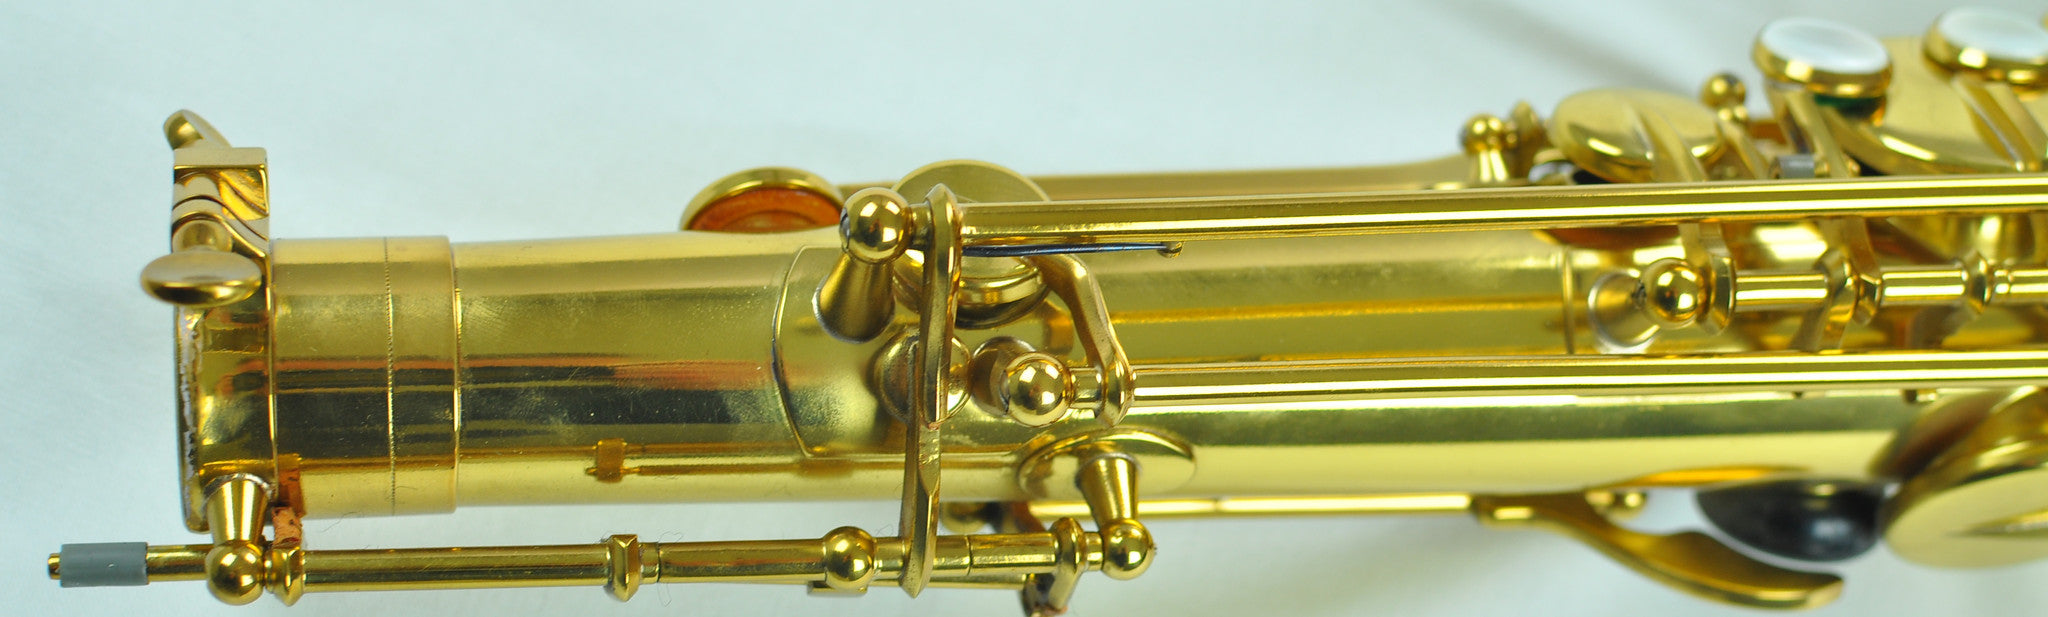 223,xxx Selmer Mark VI Tenor Saxophone With Original Lacquer Near Mint